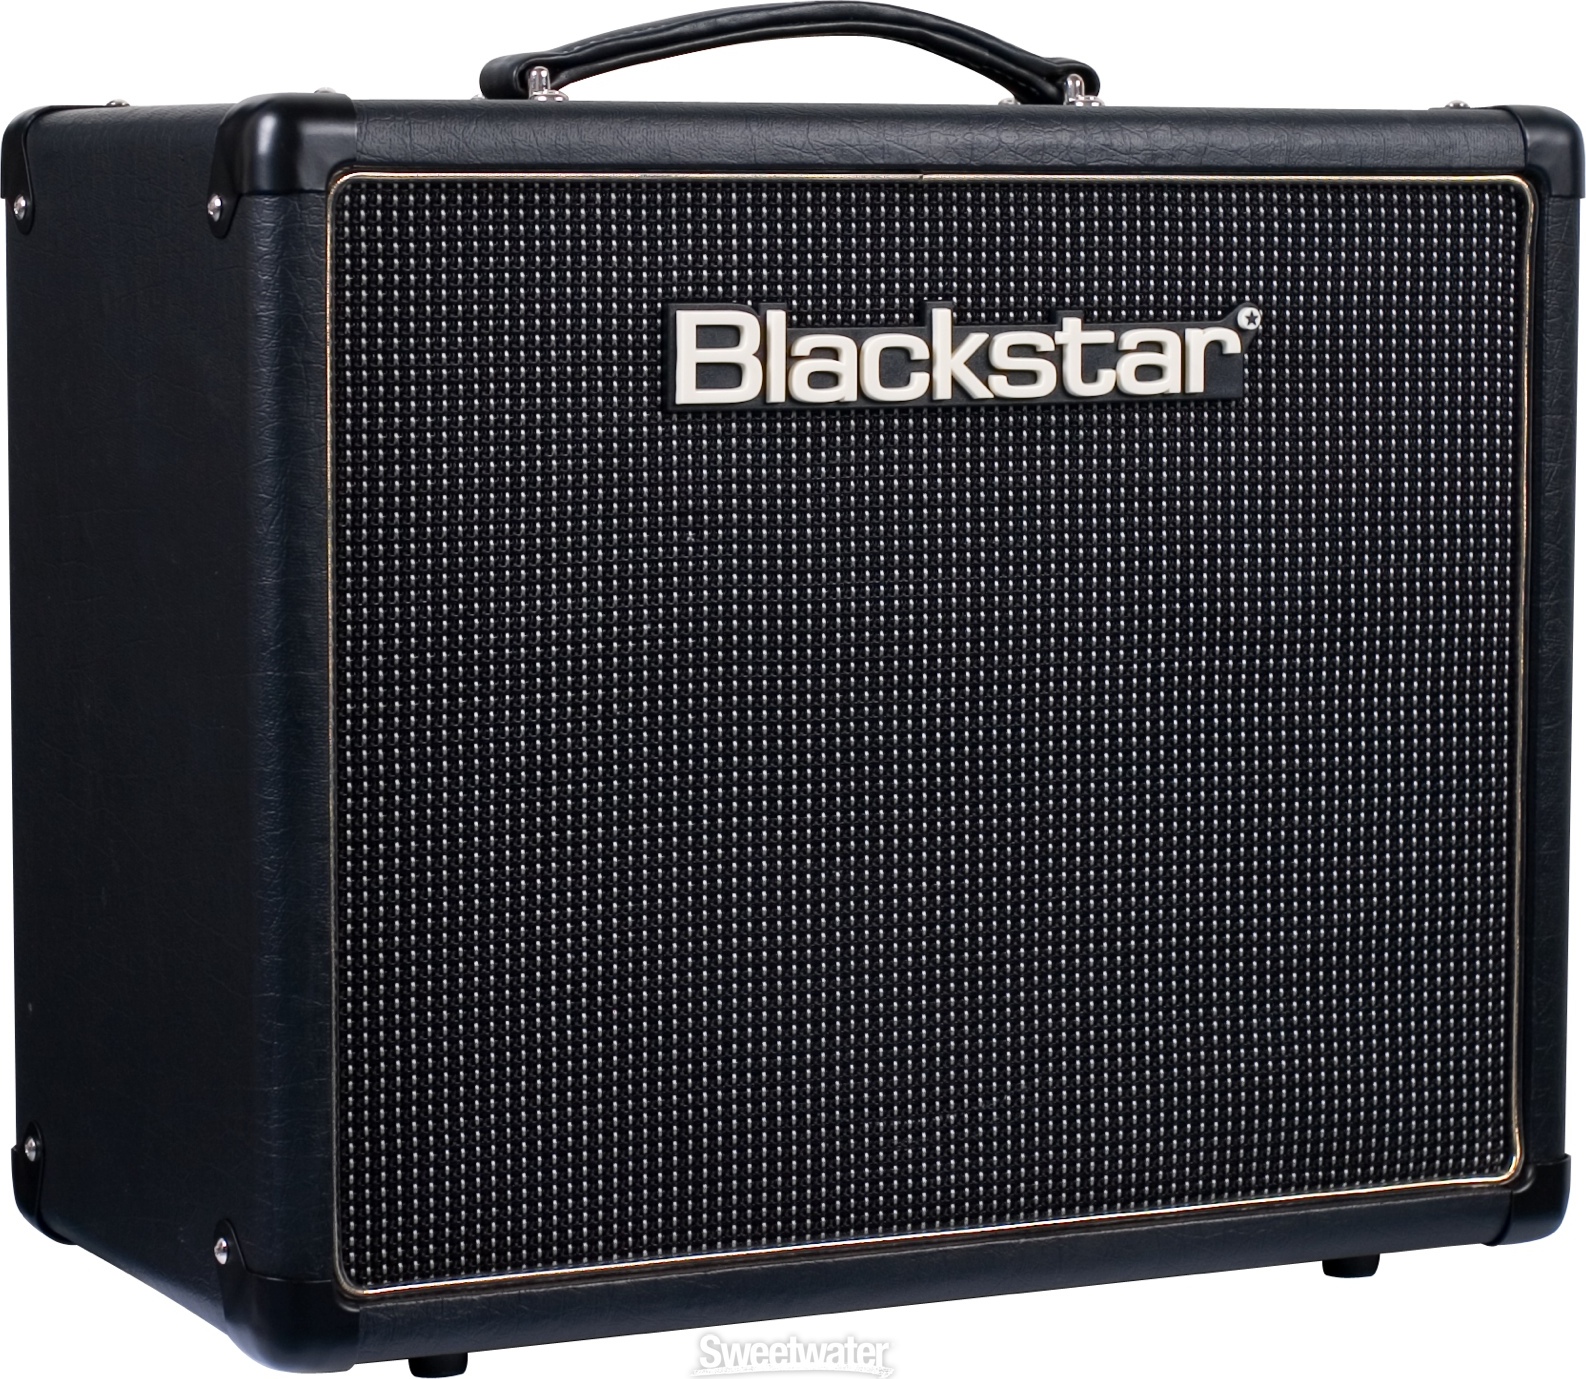 Blackstar Ht-5r 5 W 1x12 - Combo amplificador para guitarra eléctrica - Main picture